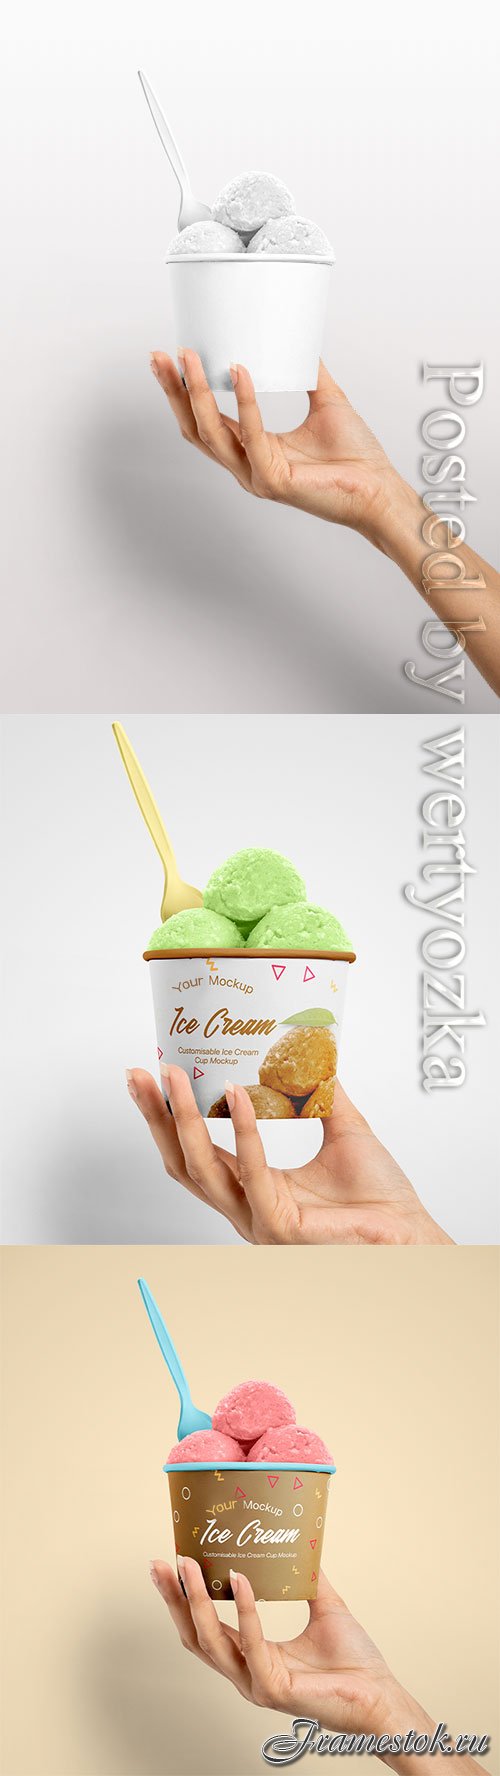 Ice Cream Cup Mockup PSD